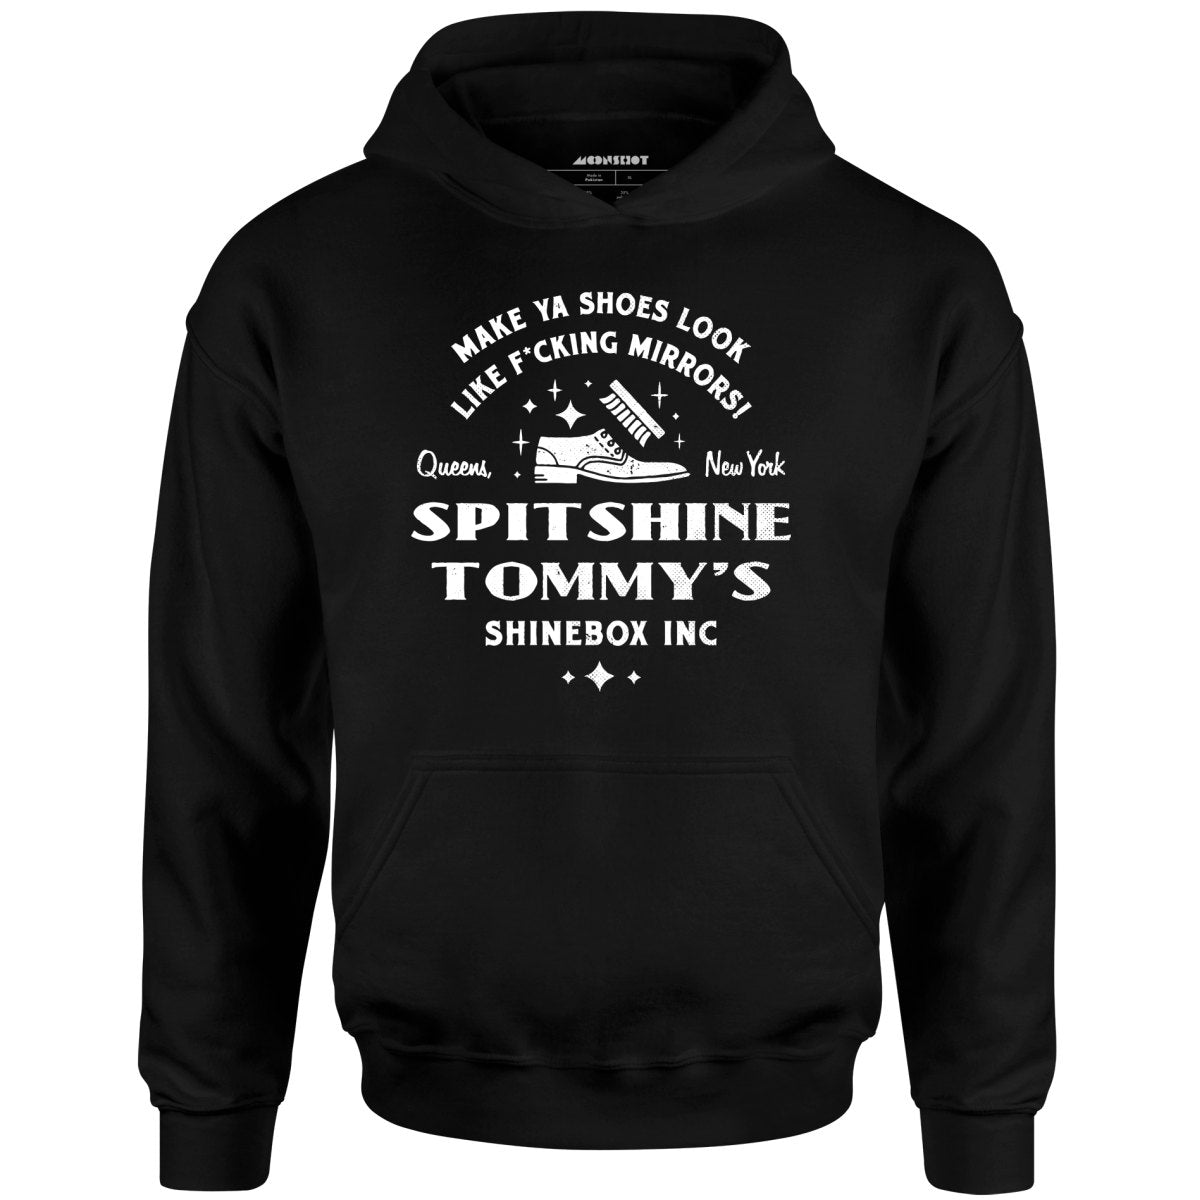 Spitshine Tommy's Shinebox Inc. - Unisex Hoodie